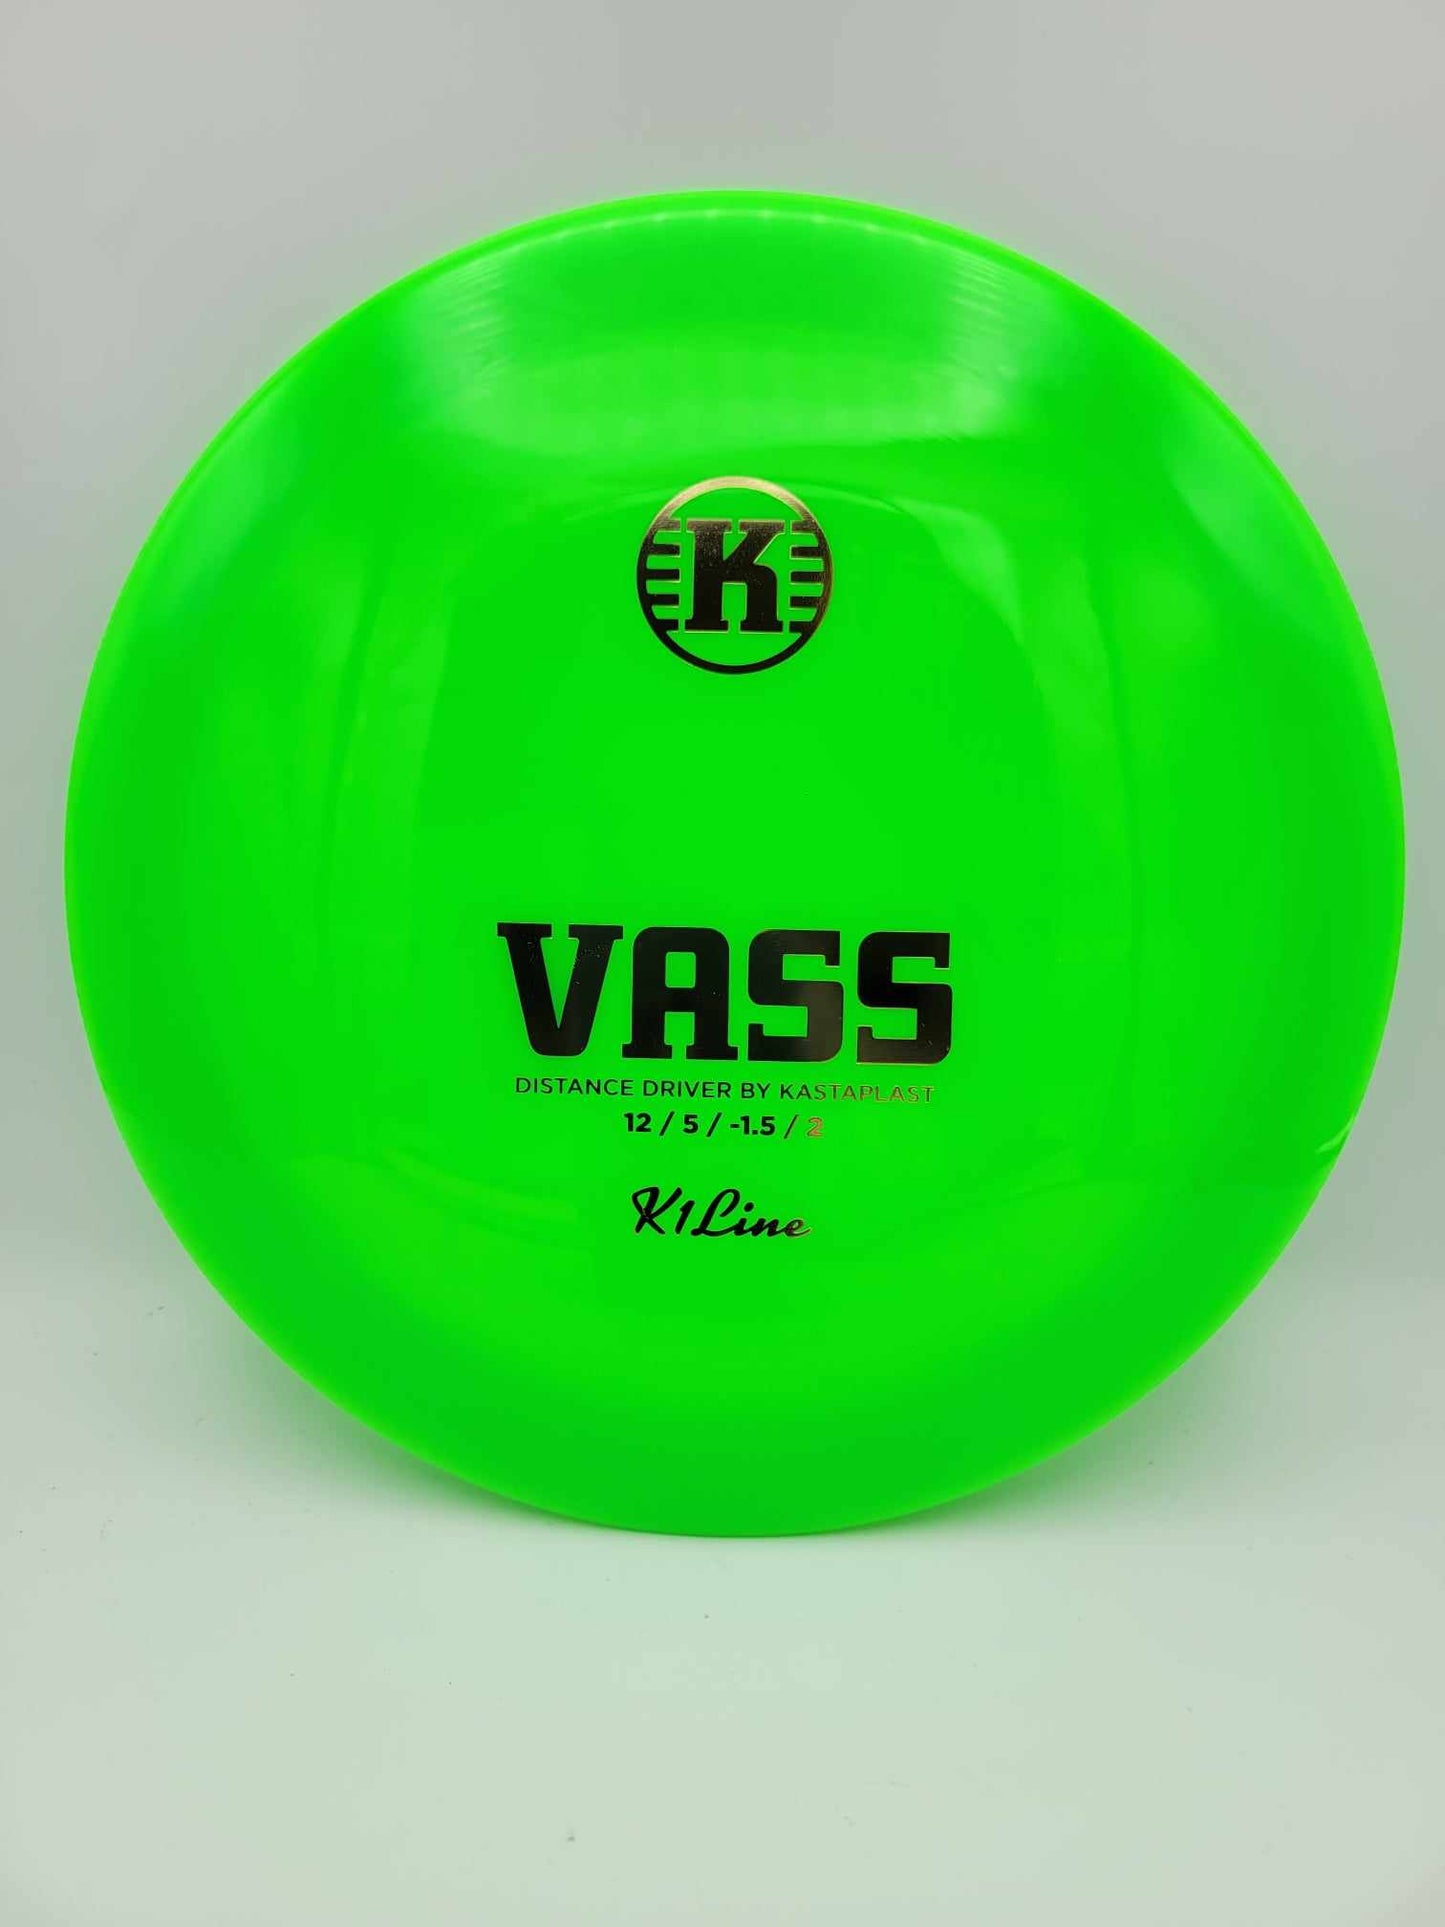 Vass (K1 Line) 12/5/-1.5/2